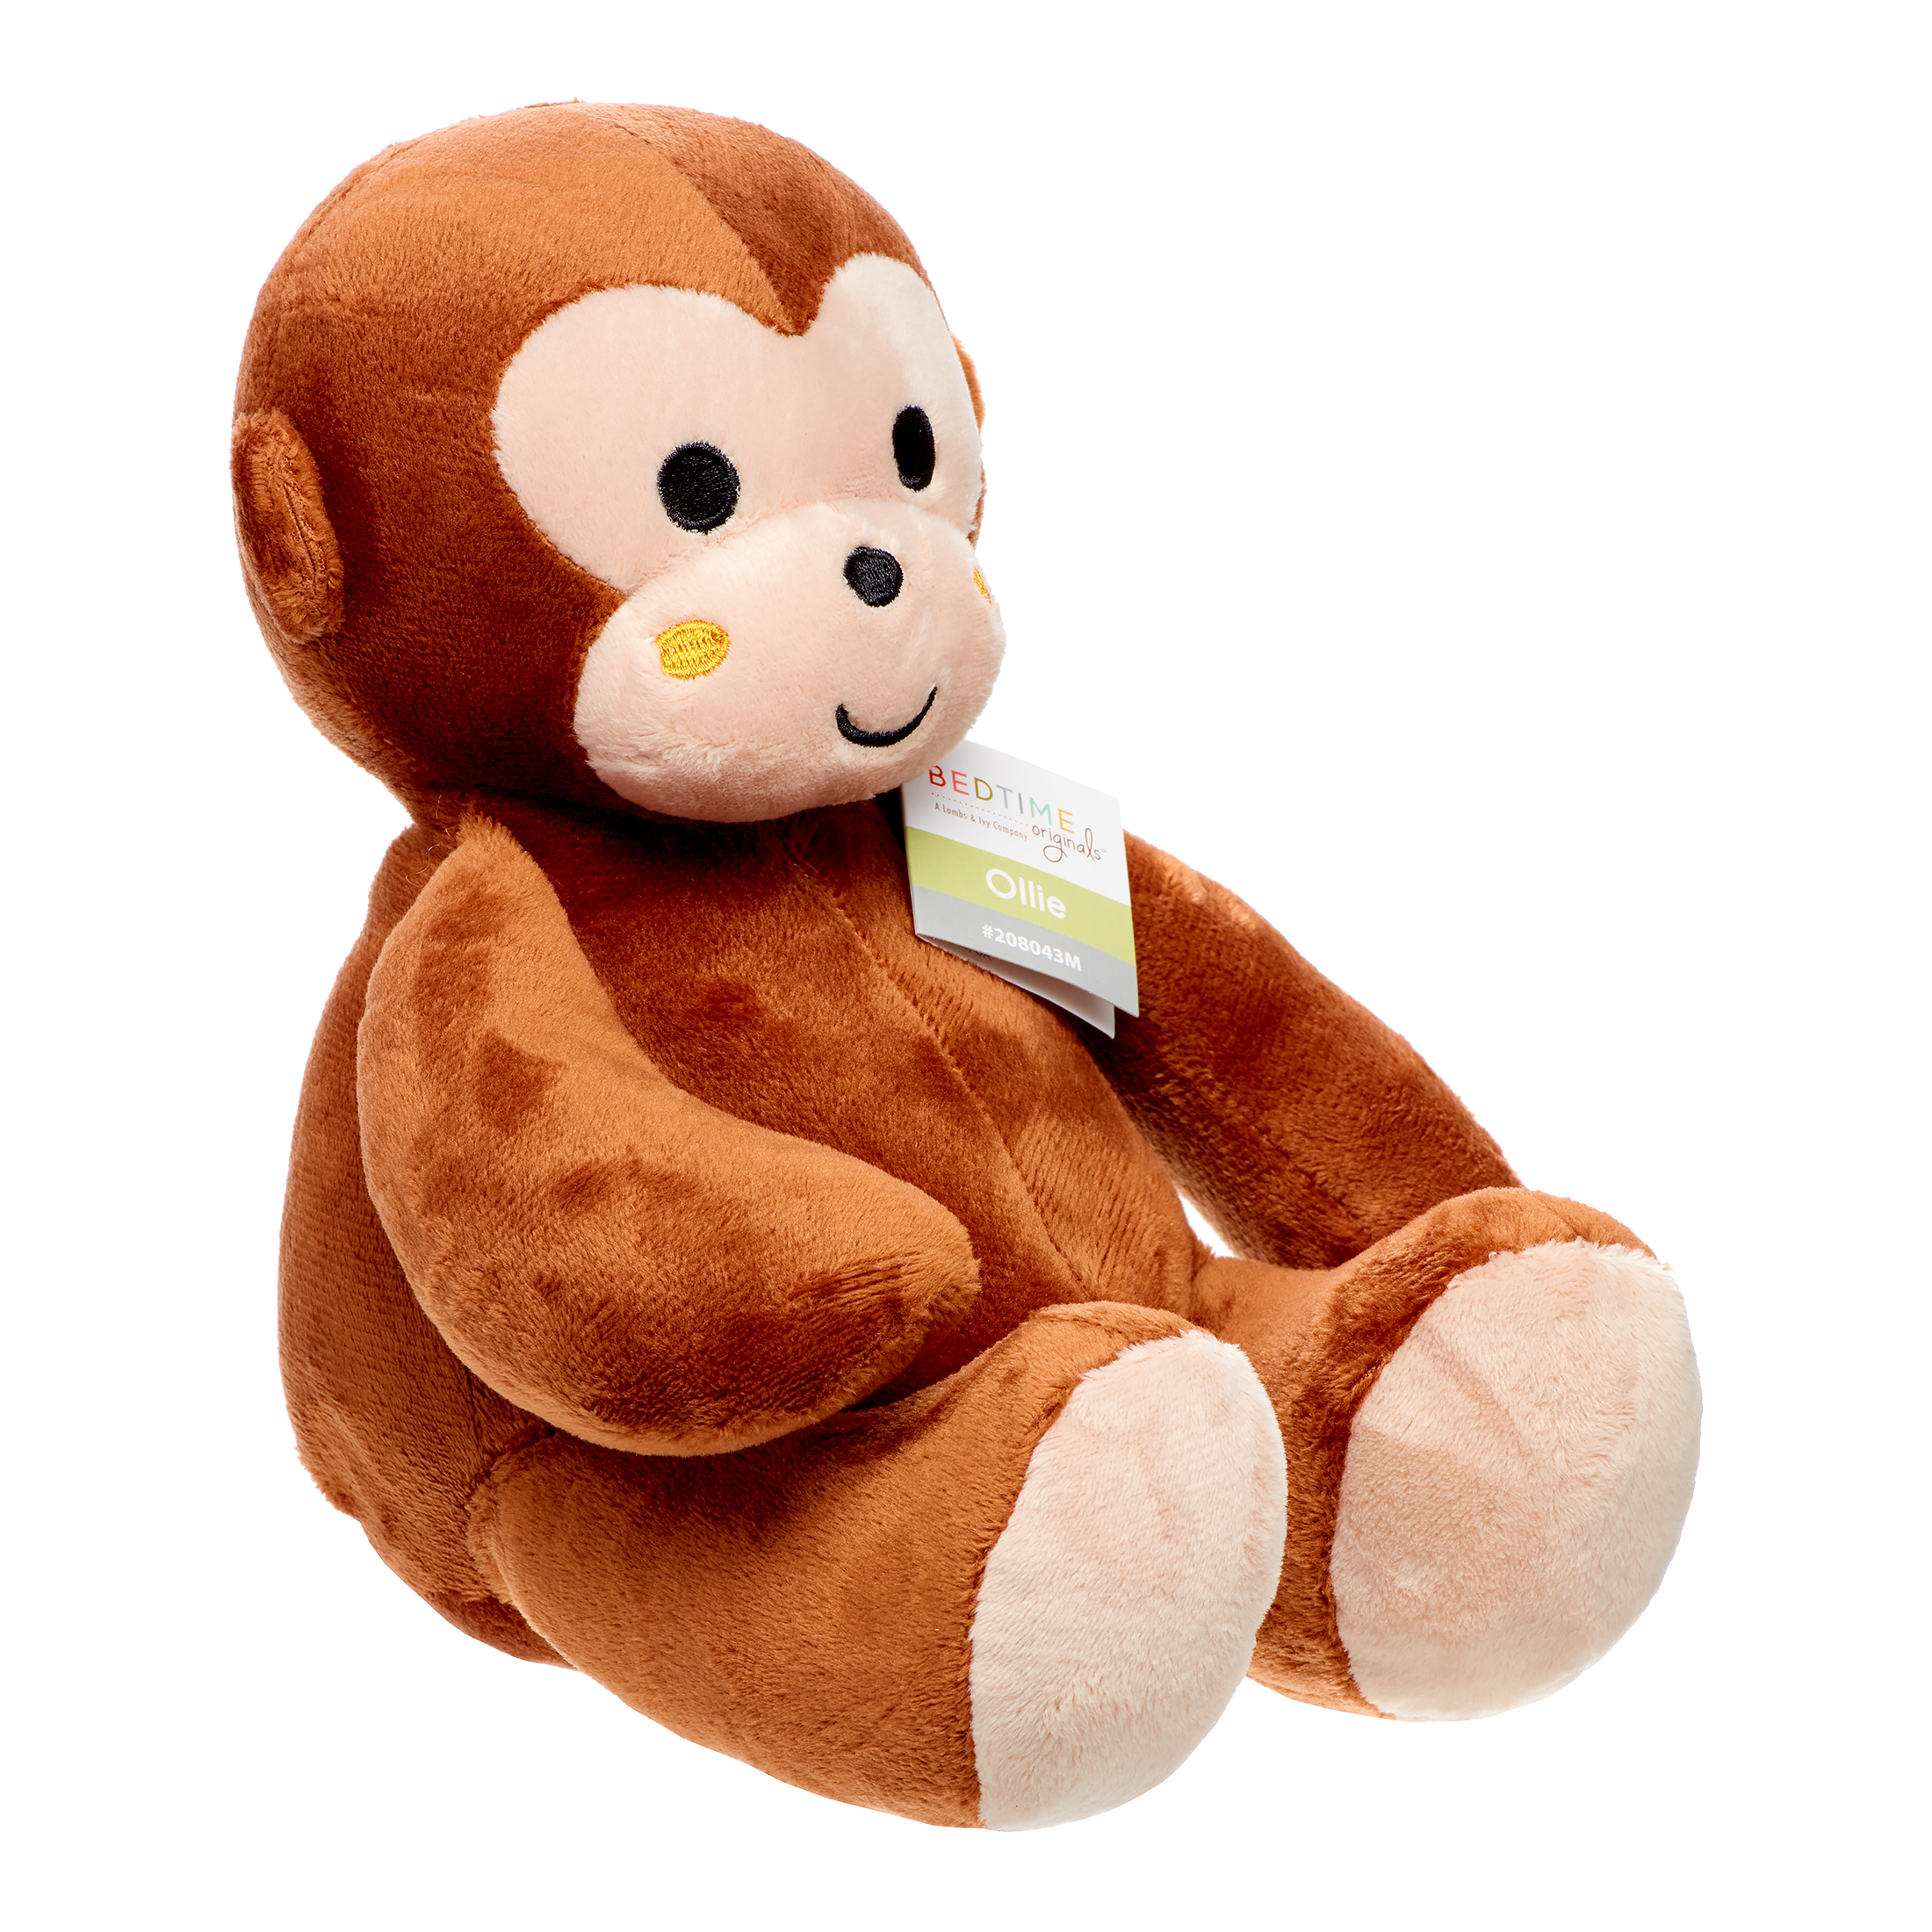 Bedtime Originals Brown Plush Monkey Stuffed Animal - Ollie - image 3 of 6